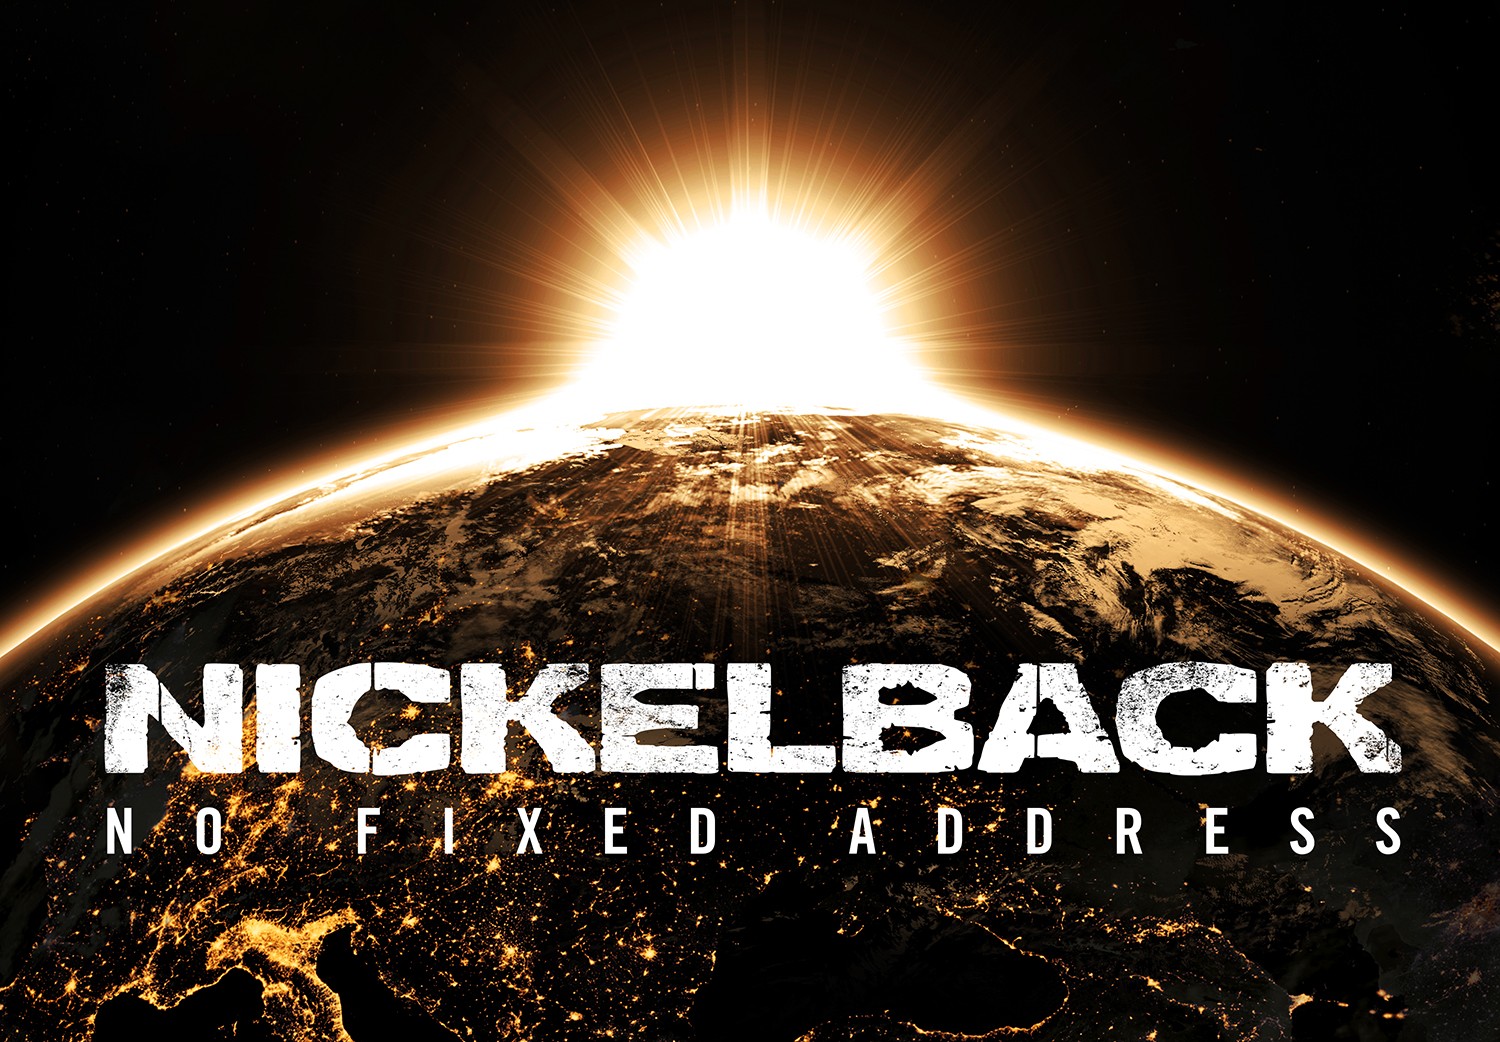 Nickelback альбомы. Nickelback логотип. Nickelback обложка. Nickelback no fixed address (2014). Никельбэк альбомы.